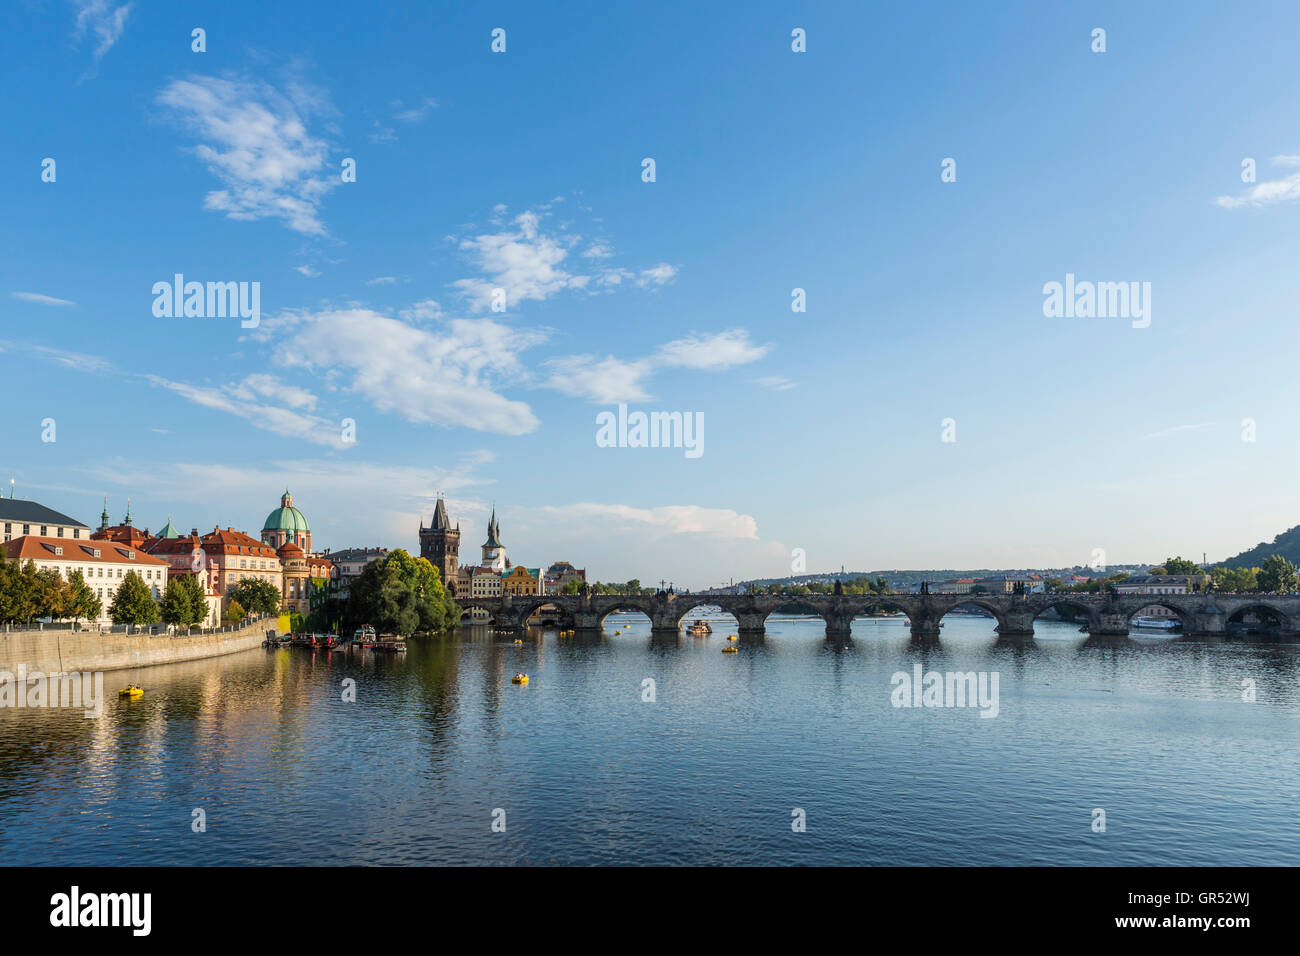 The Charles Bridge over the Vltava river in Prague, Czech Republic Stock Photo